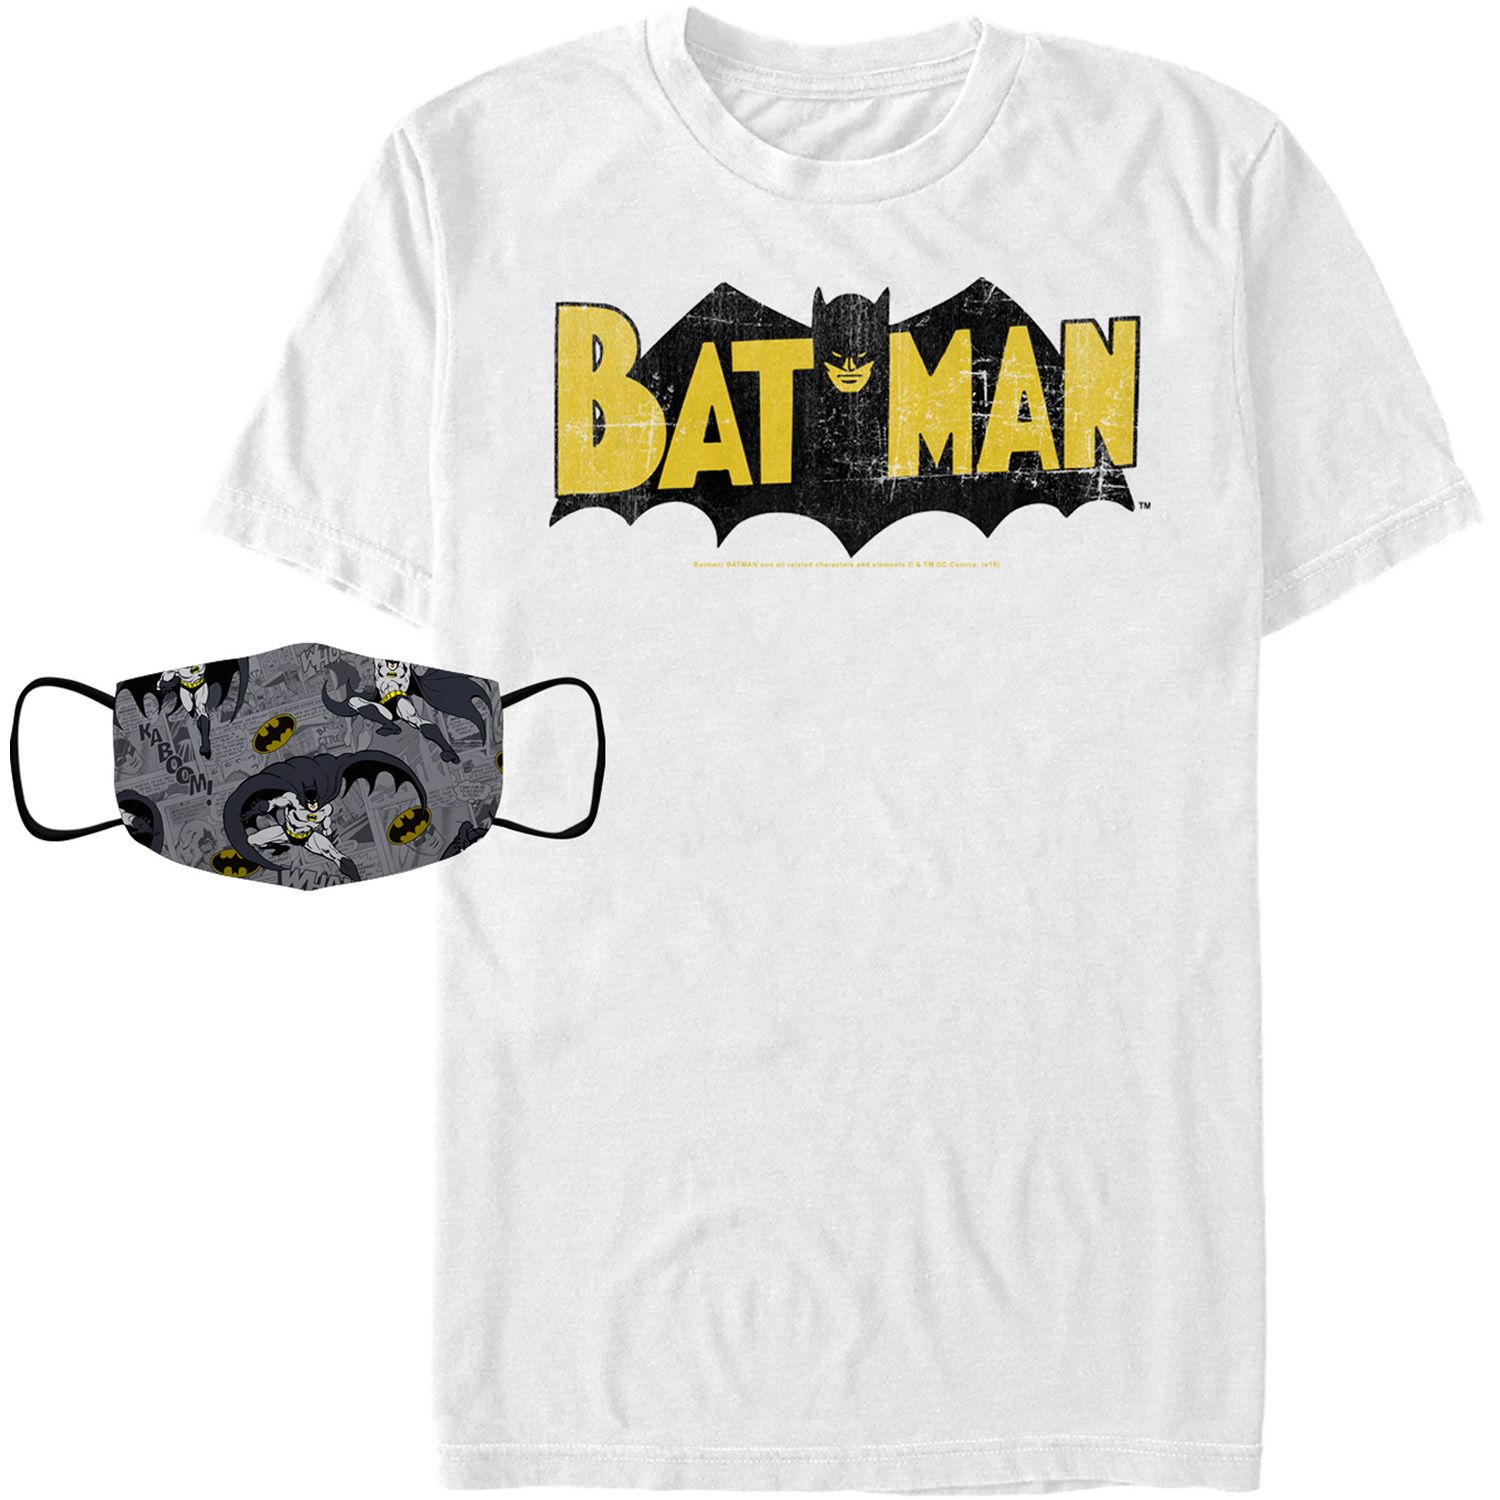 batman graphic tee